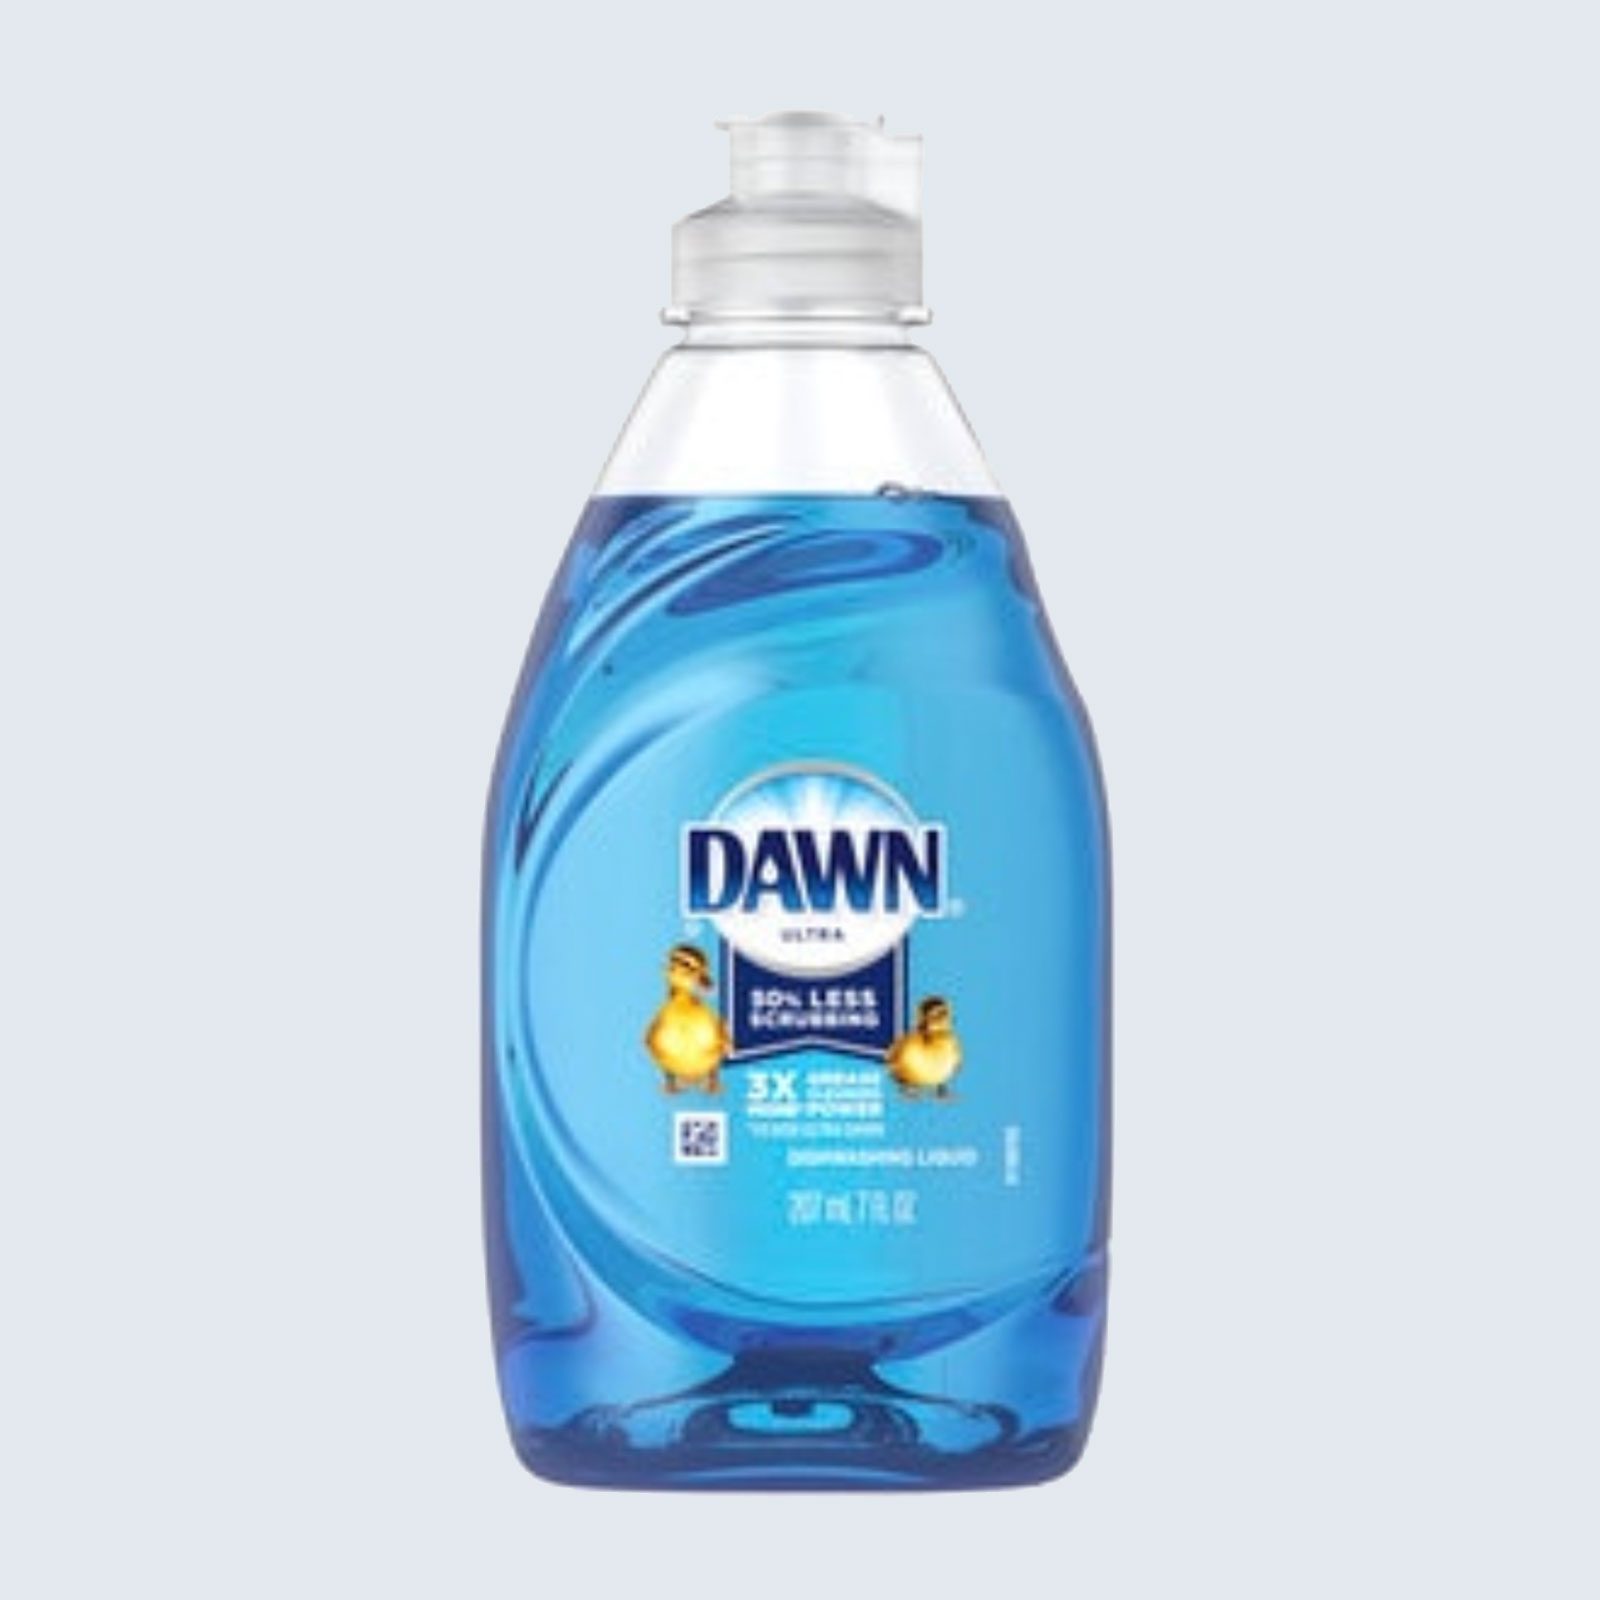 Best bargain makeup brush cleaner: Dawn Ultra Dishwashing Liquid